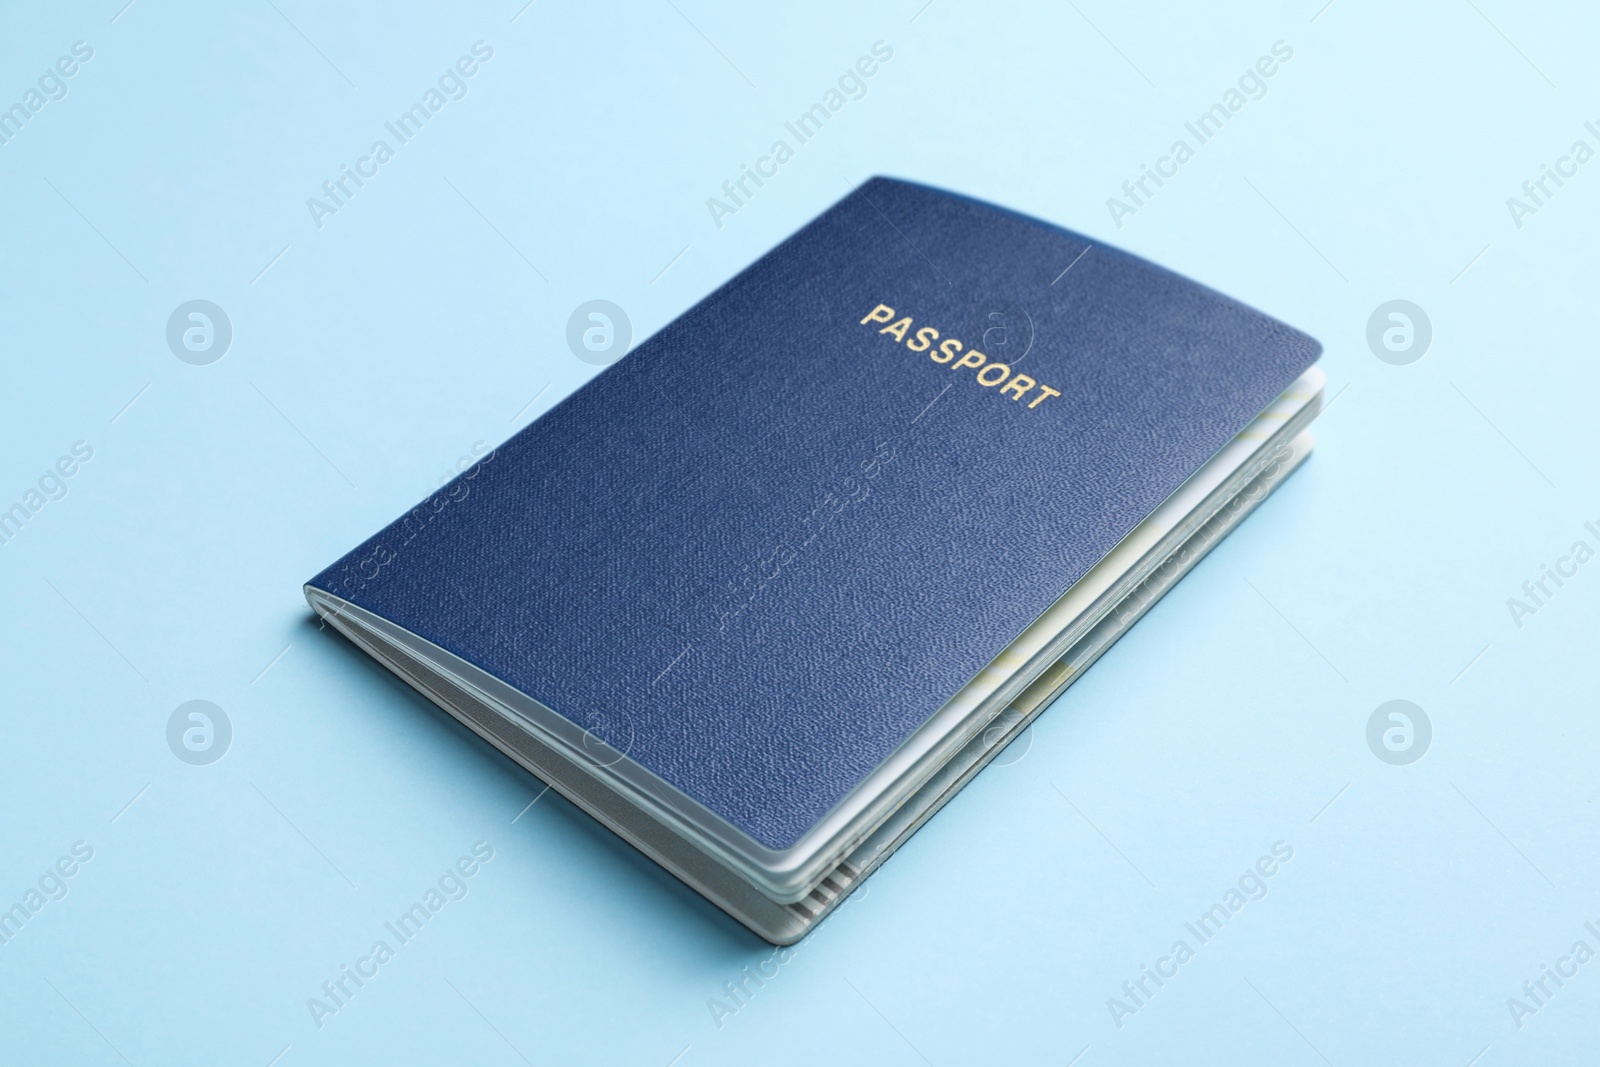 Photo of Blank passport on light blue background, closeup